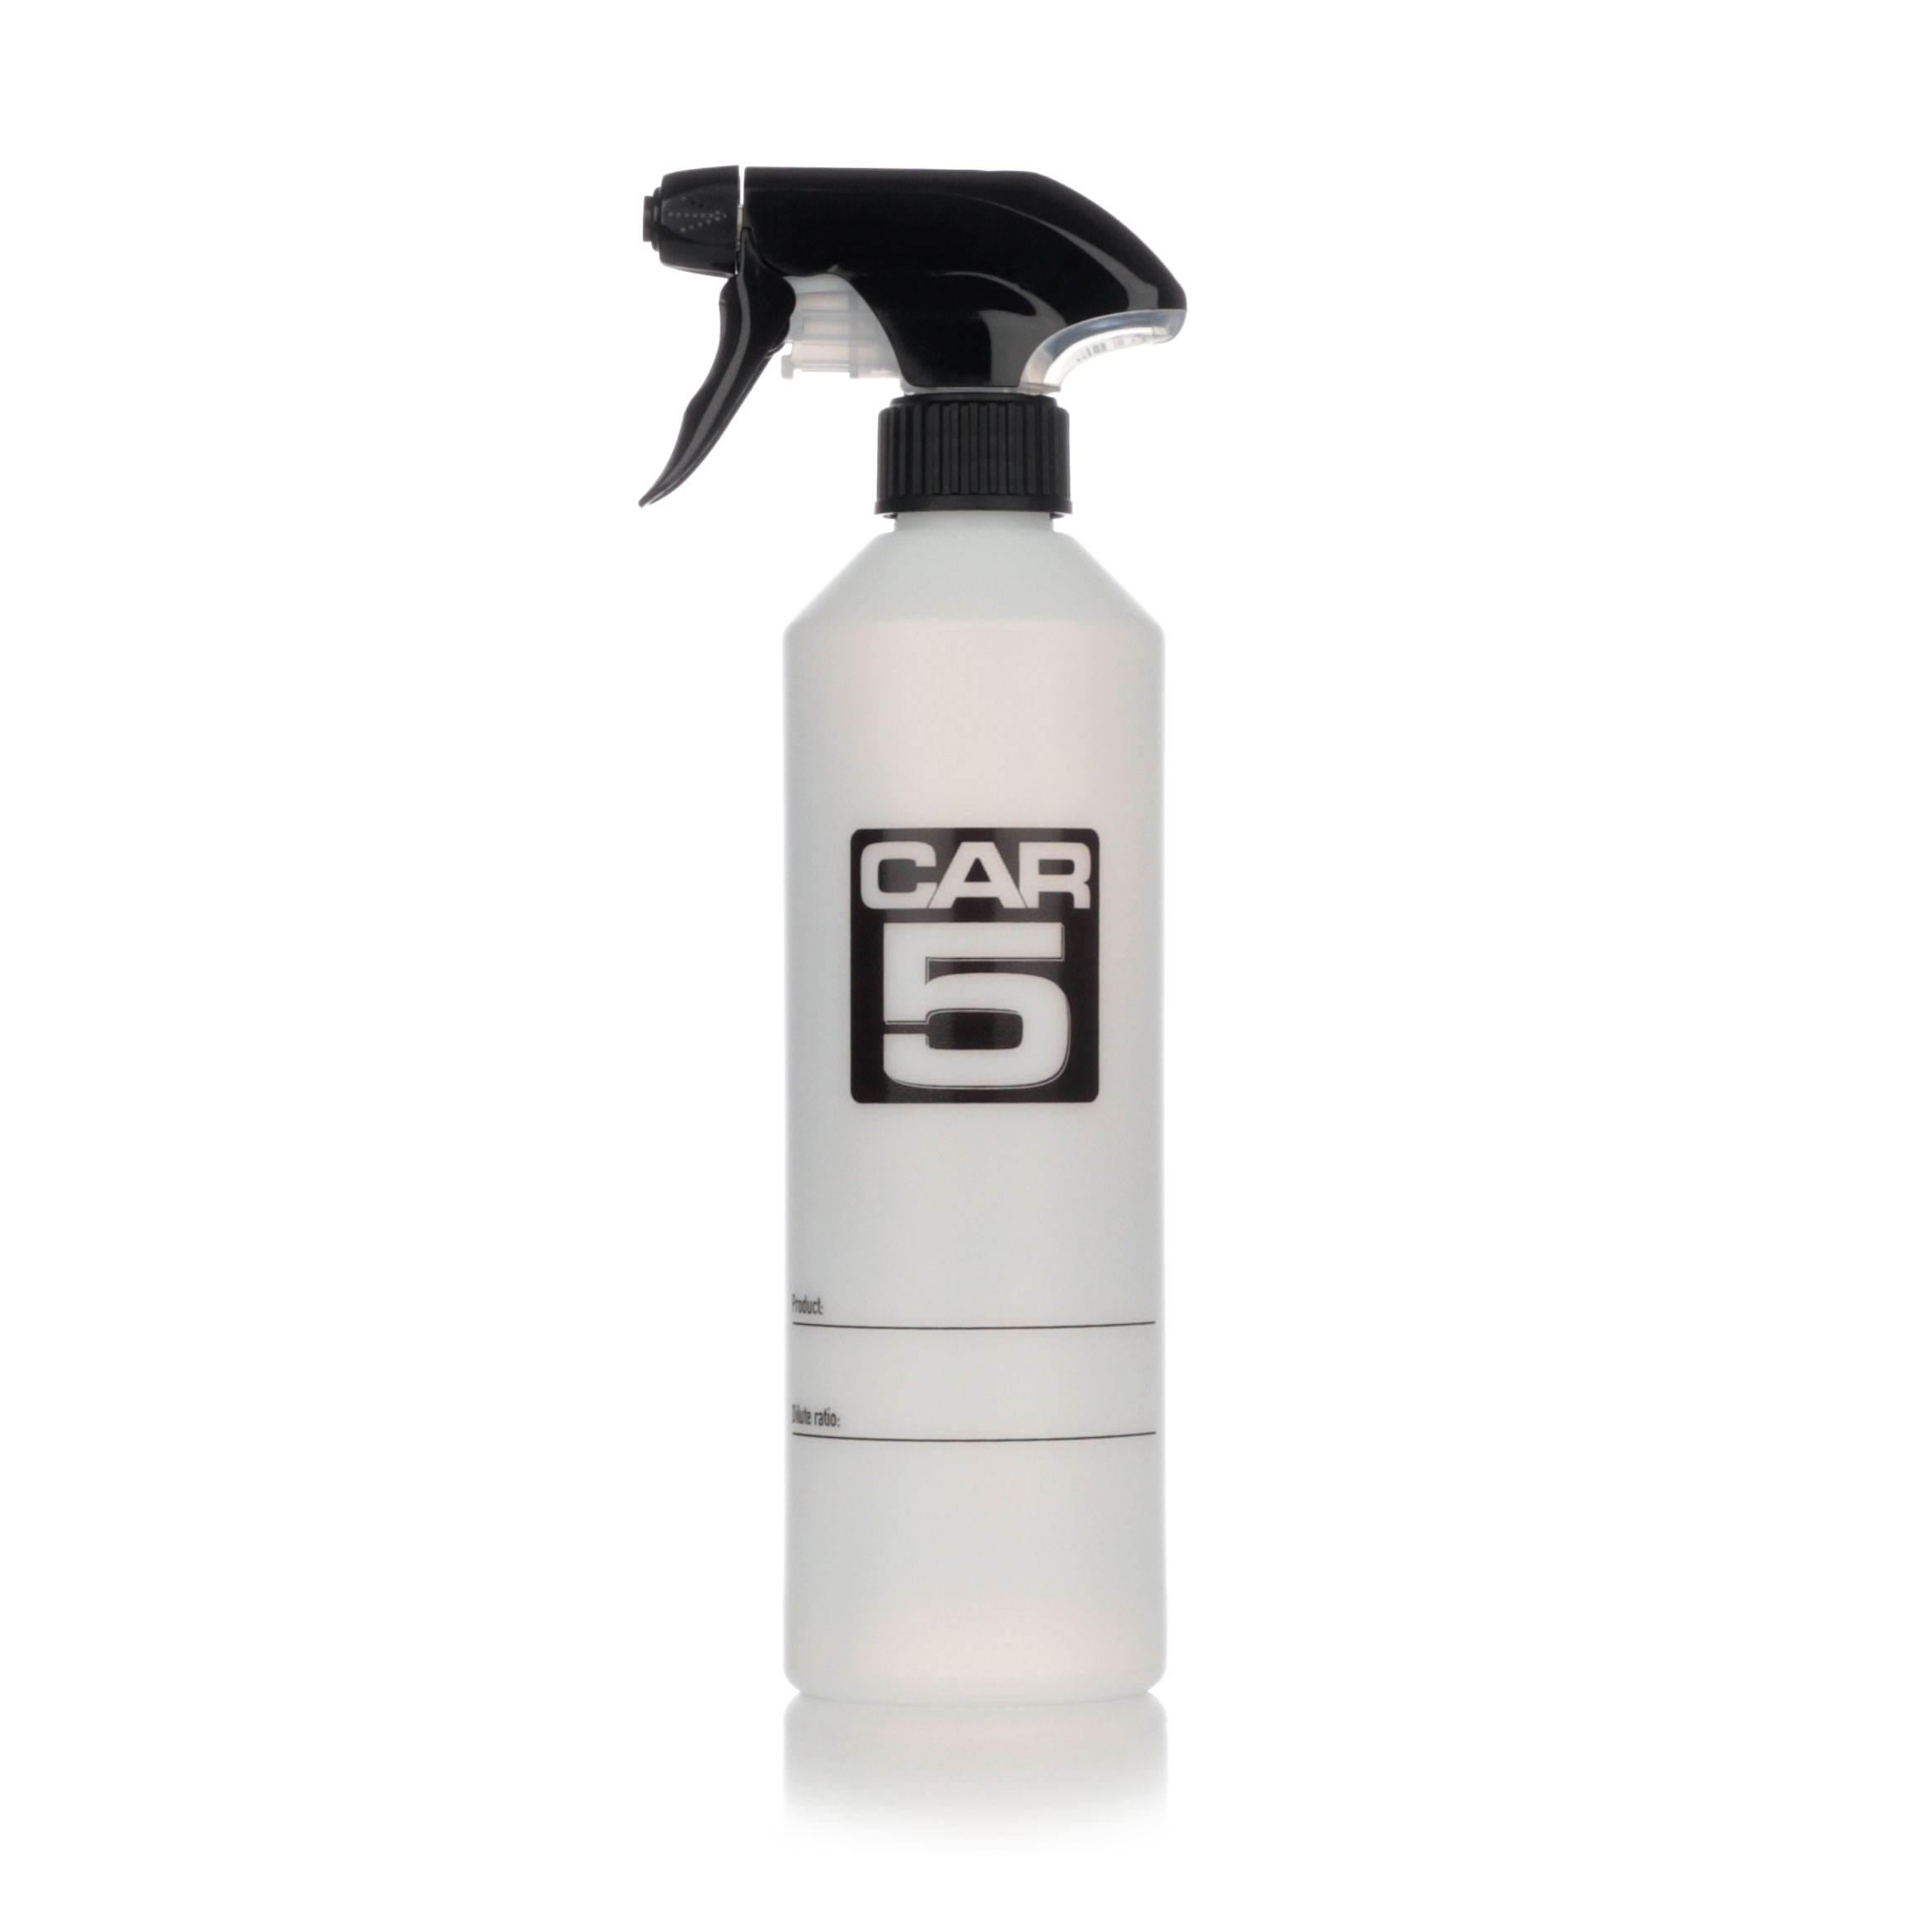 Sprayflaske CAR5 Dilute Bottle, 500 ml - Basic Trigger, 1 stk